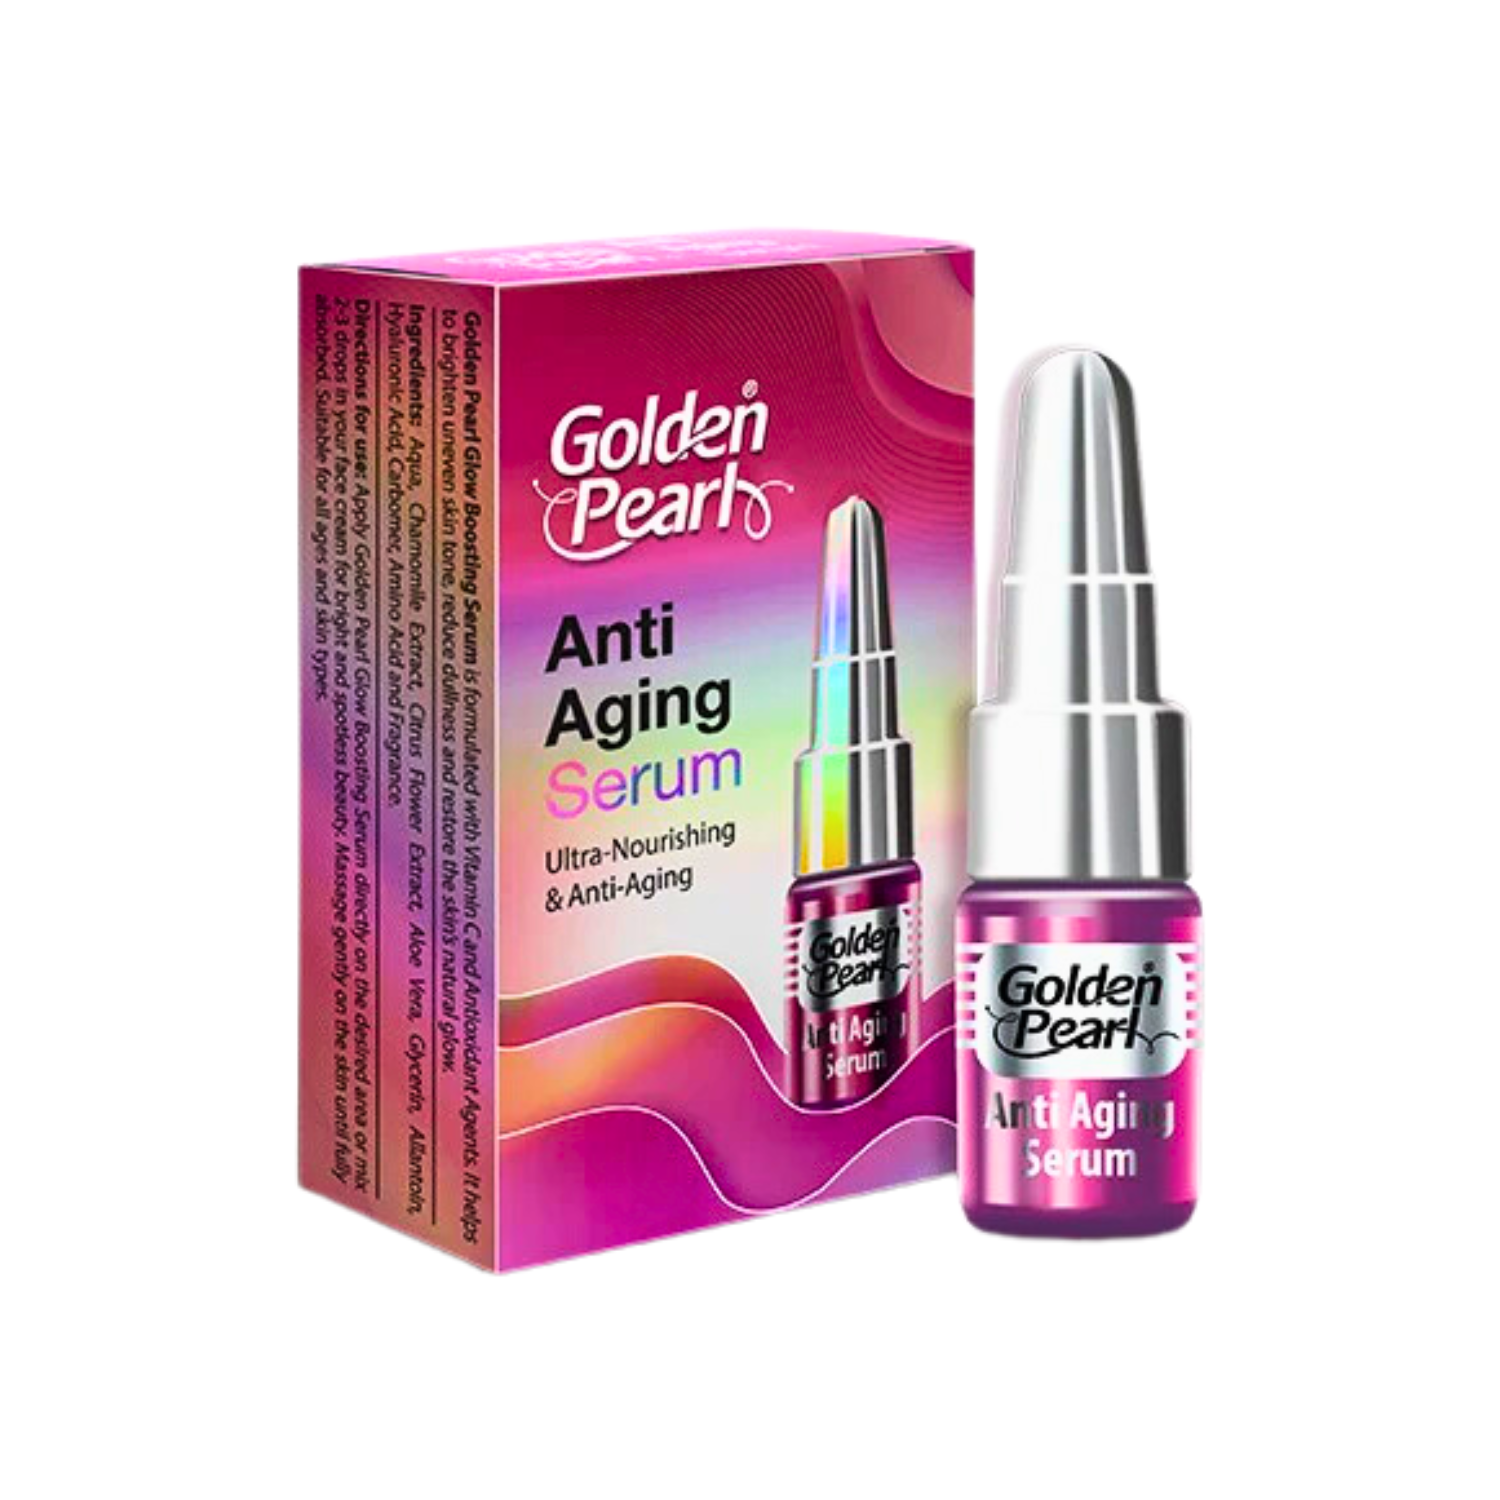 golden-pearl-anti-aging-serum-ultra-nourishing-anti-aging-3ml